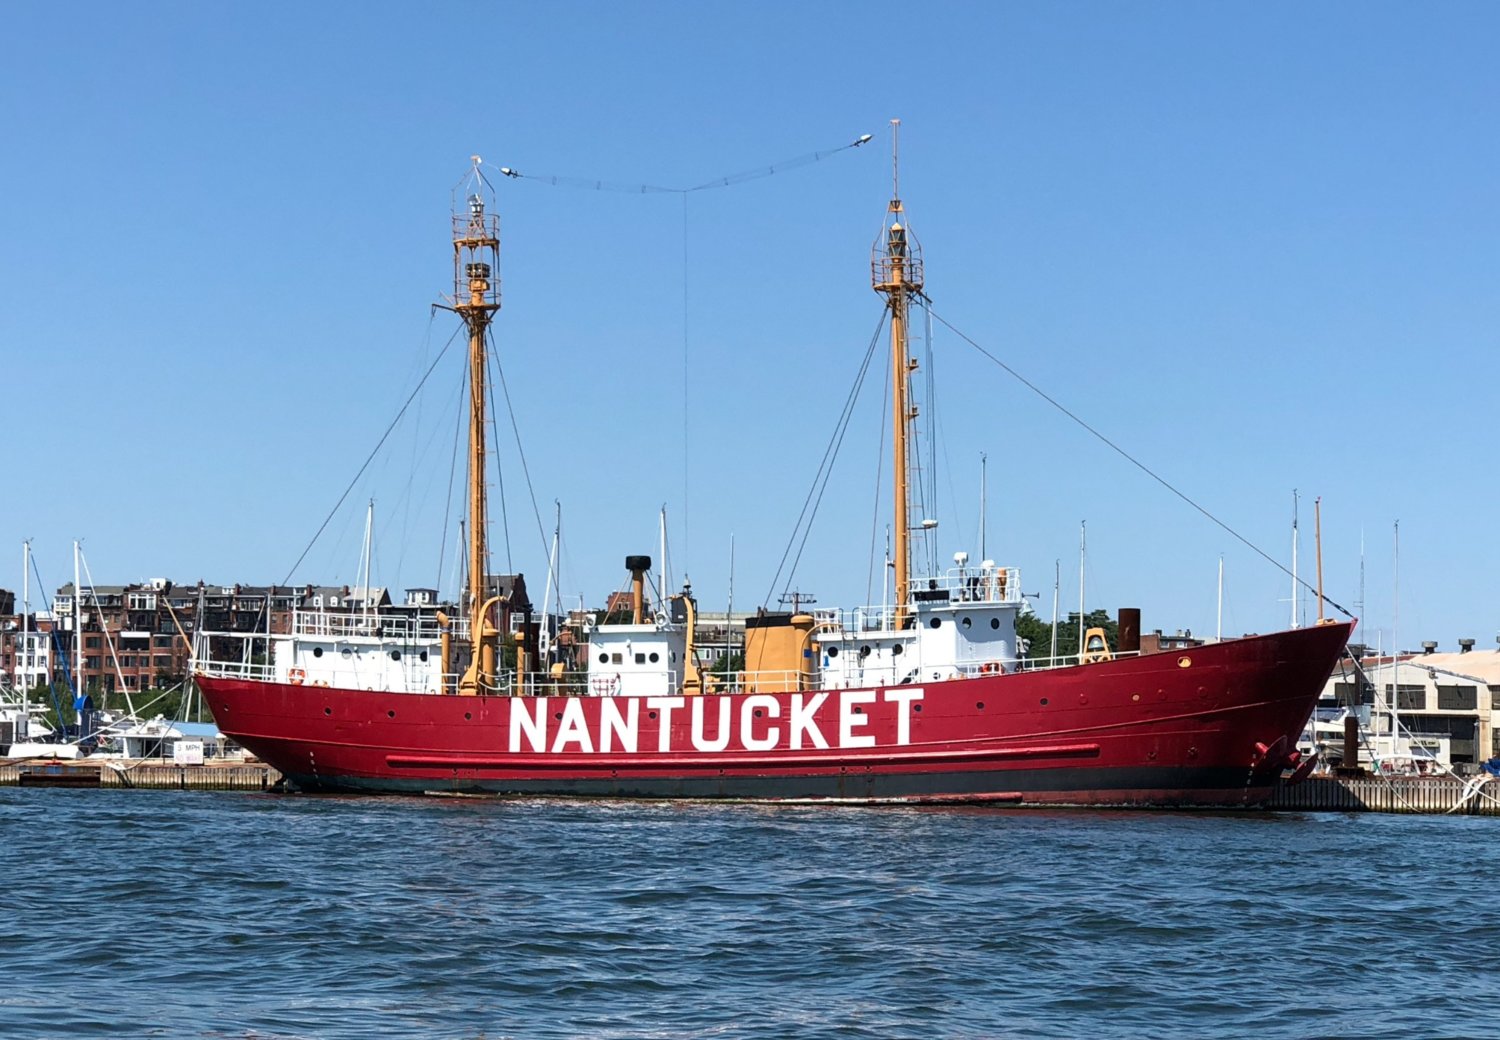 Nantucket Lightship LV-112